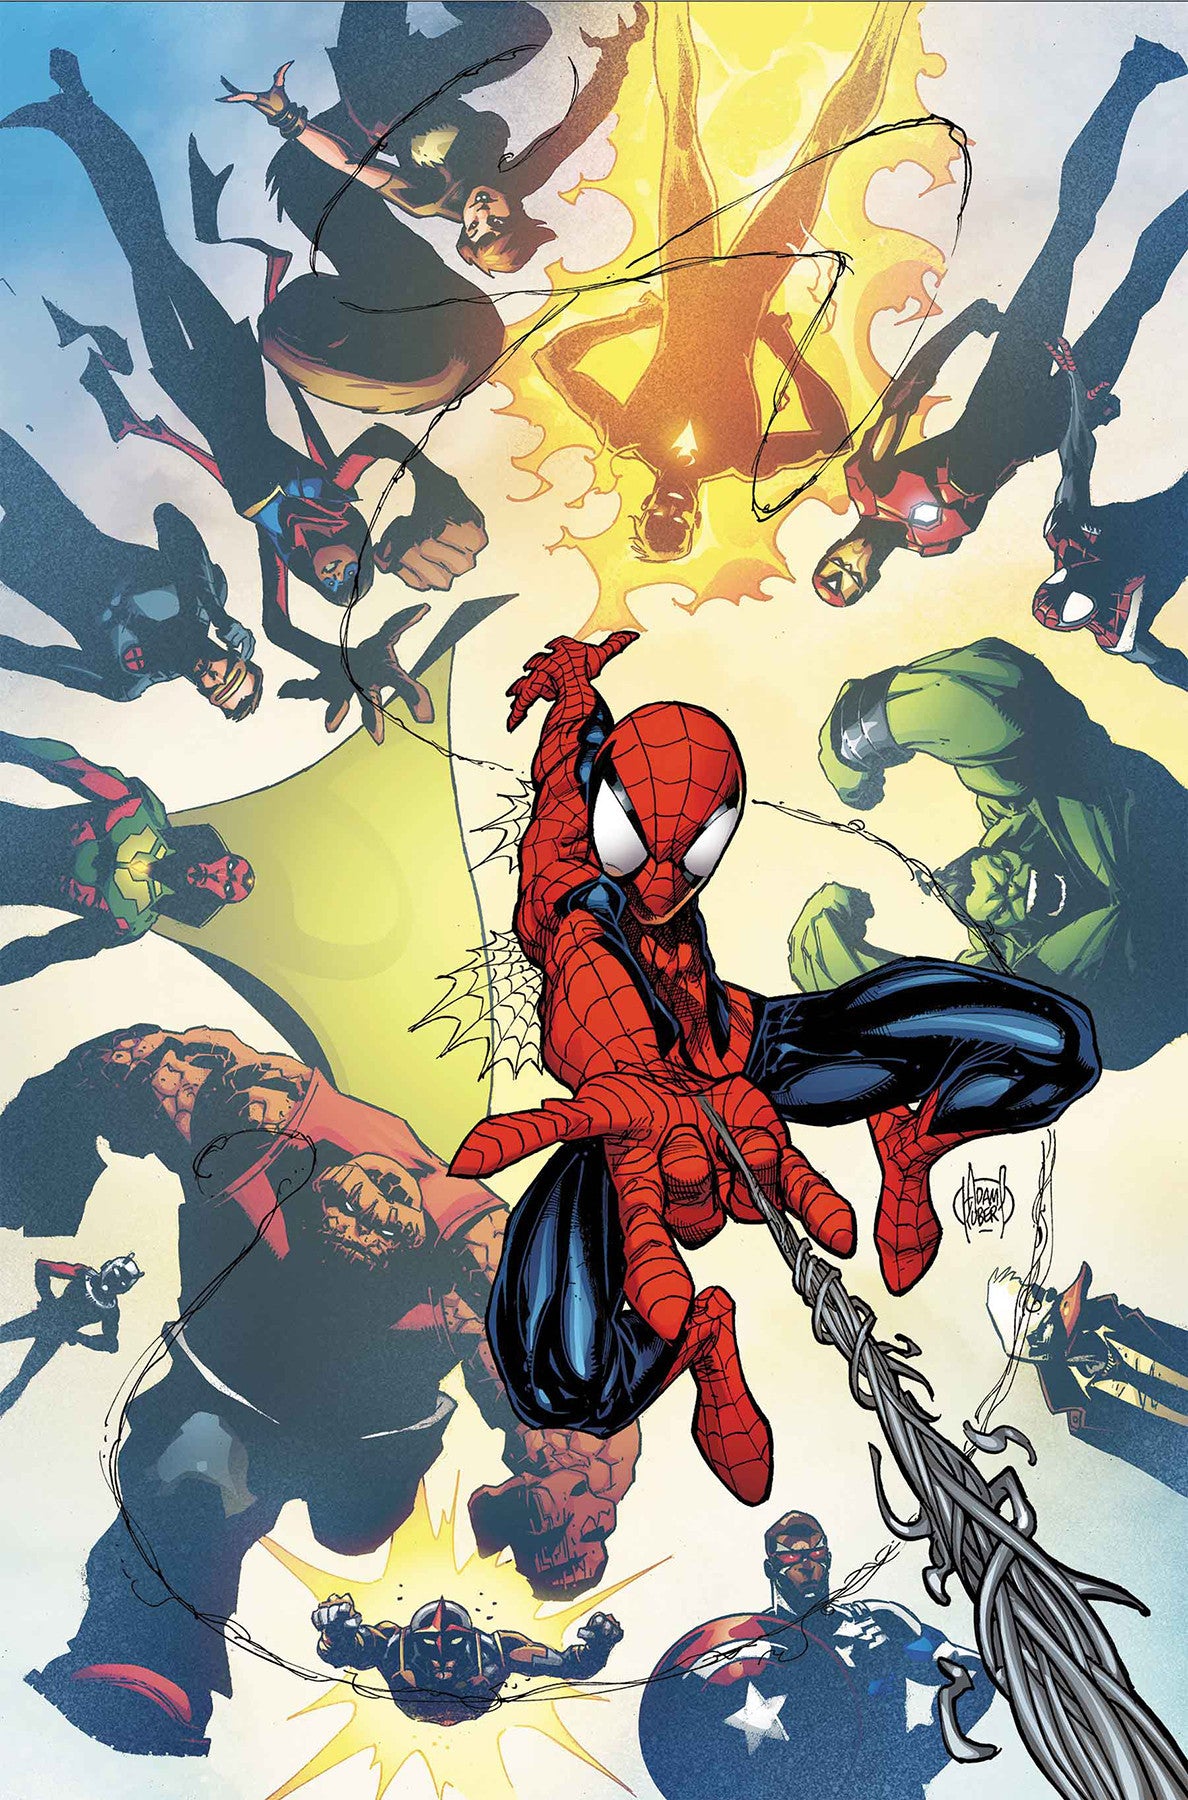 PETER PARKER SPECTACULAR SPIDER-MAN #2 COVER